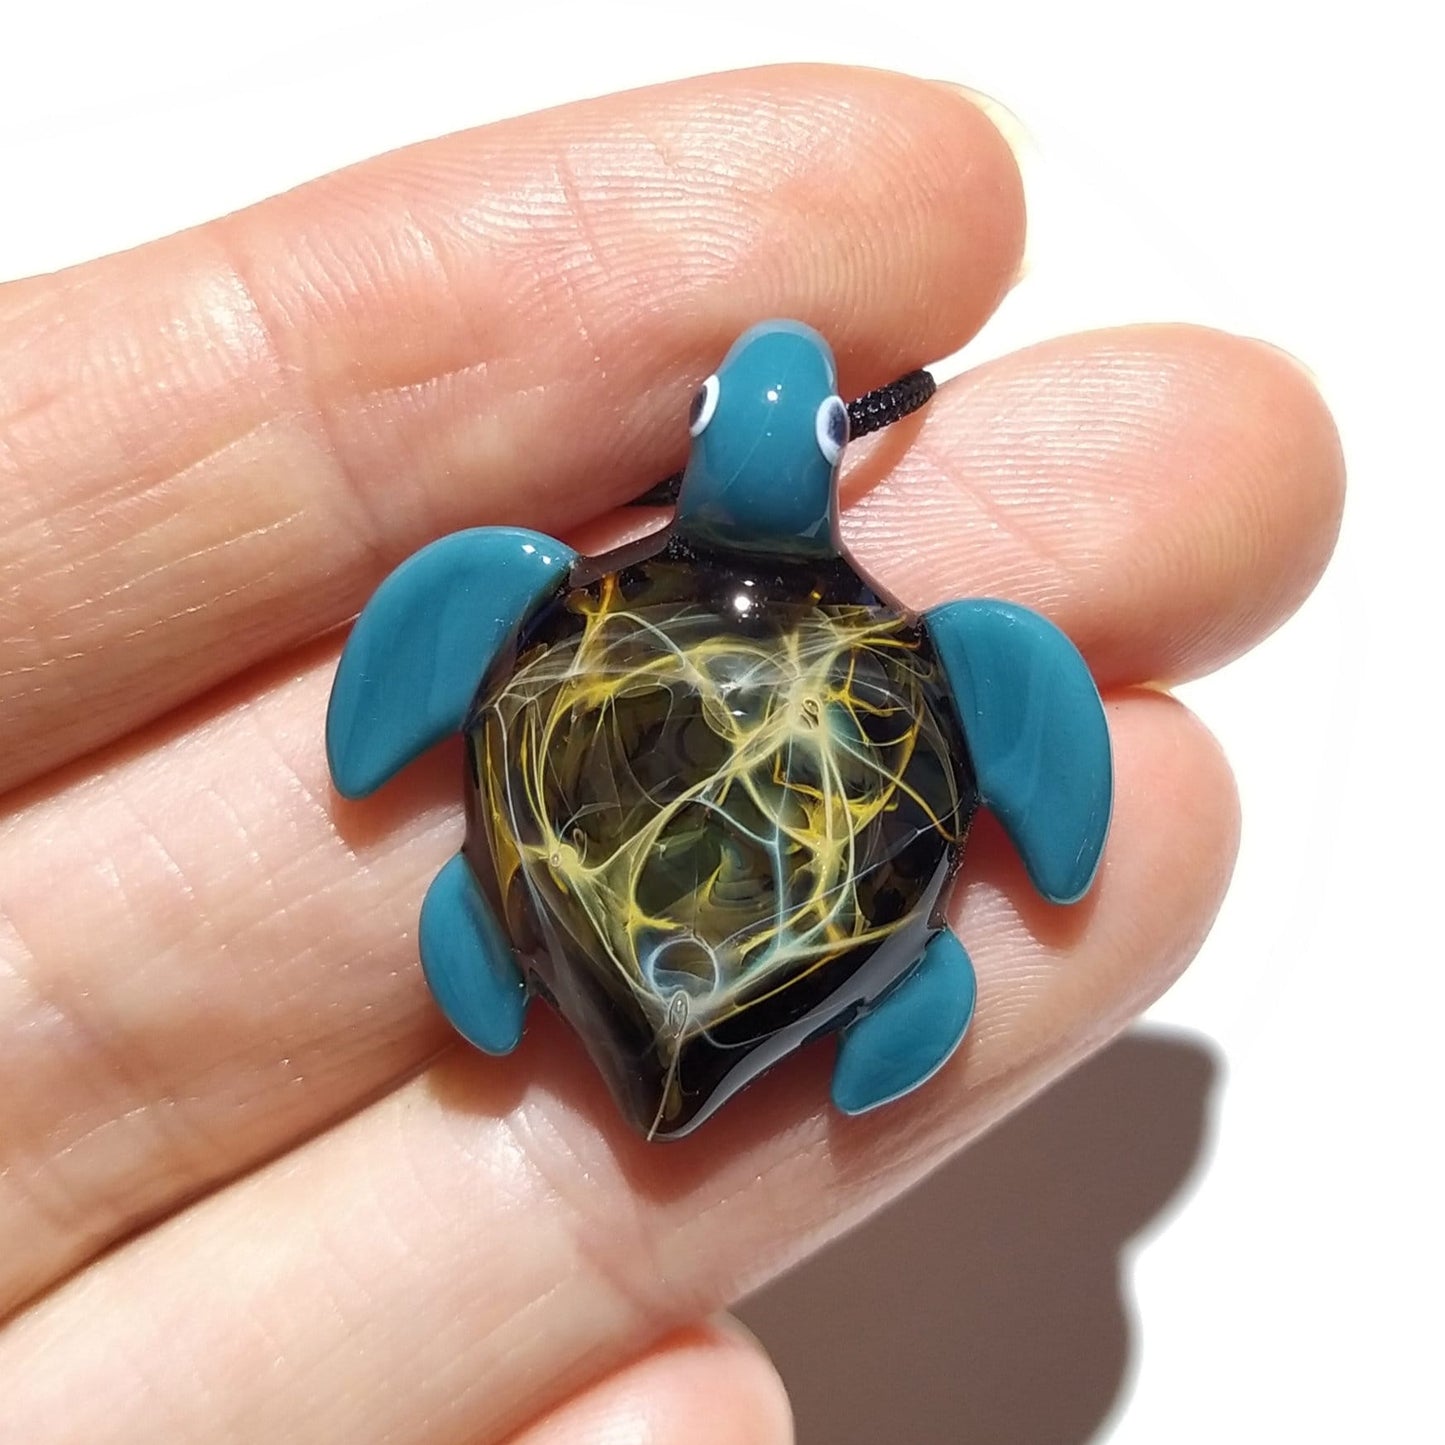 Glass Jewelry - Mystical Jem Mini Turtle Pendant - Glass Art - Blown Glass - Handmade - Unique Jewelry - Boro Pendant - Universe Filament